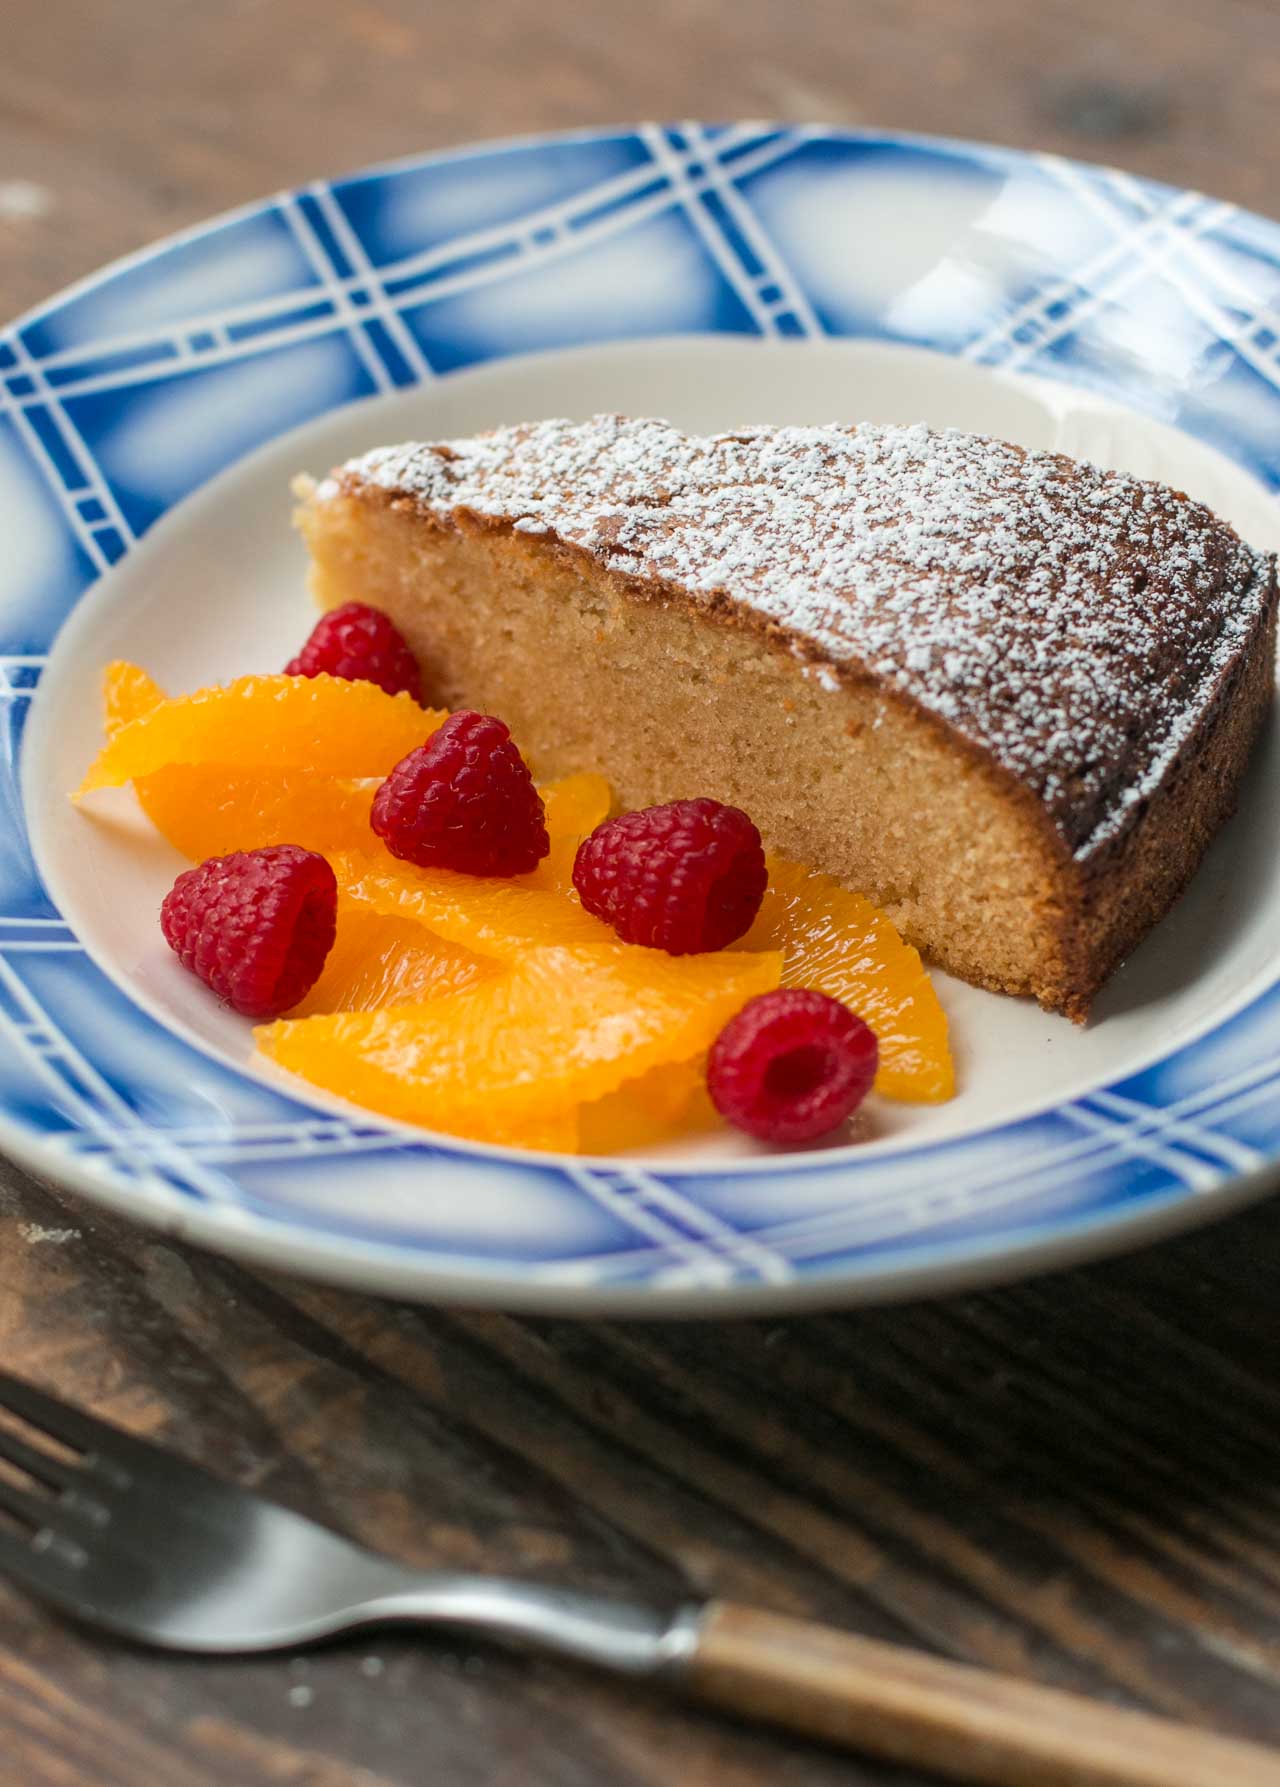 https://www.davidlebovitz.com/wp-content/uploads/2010/06/almond-cake-recipe-5.jpg